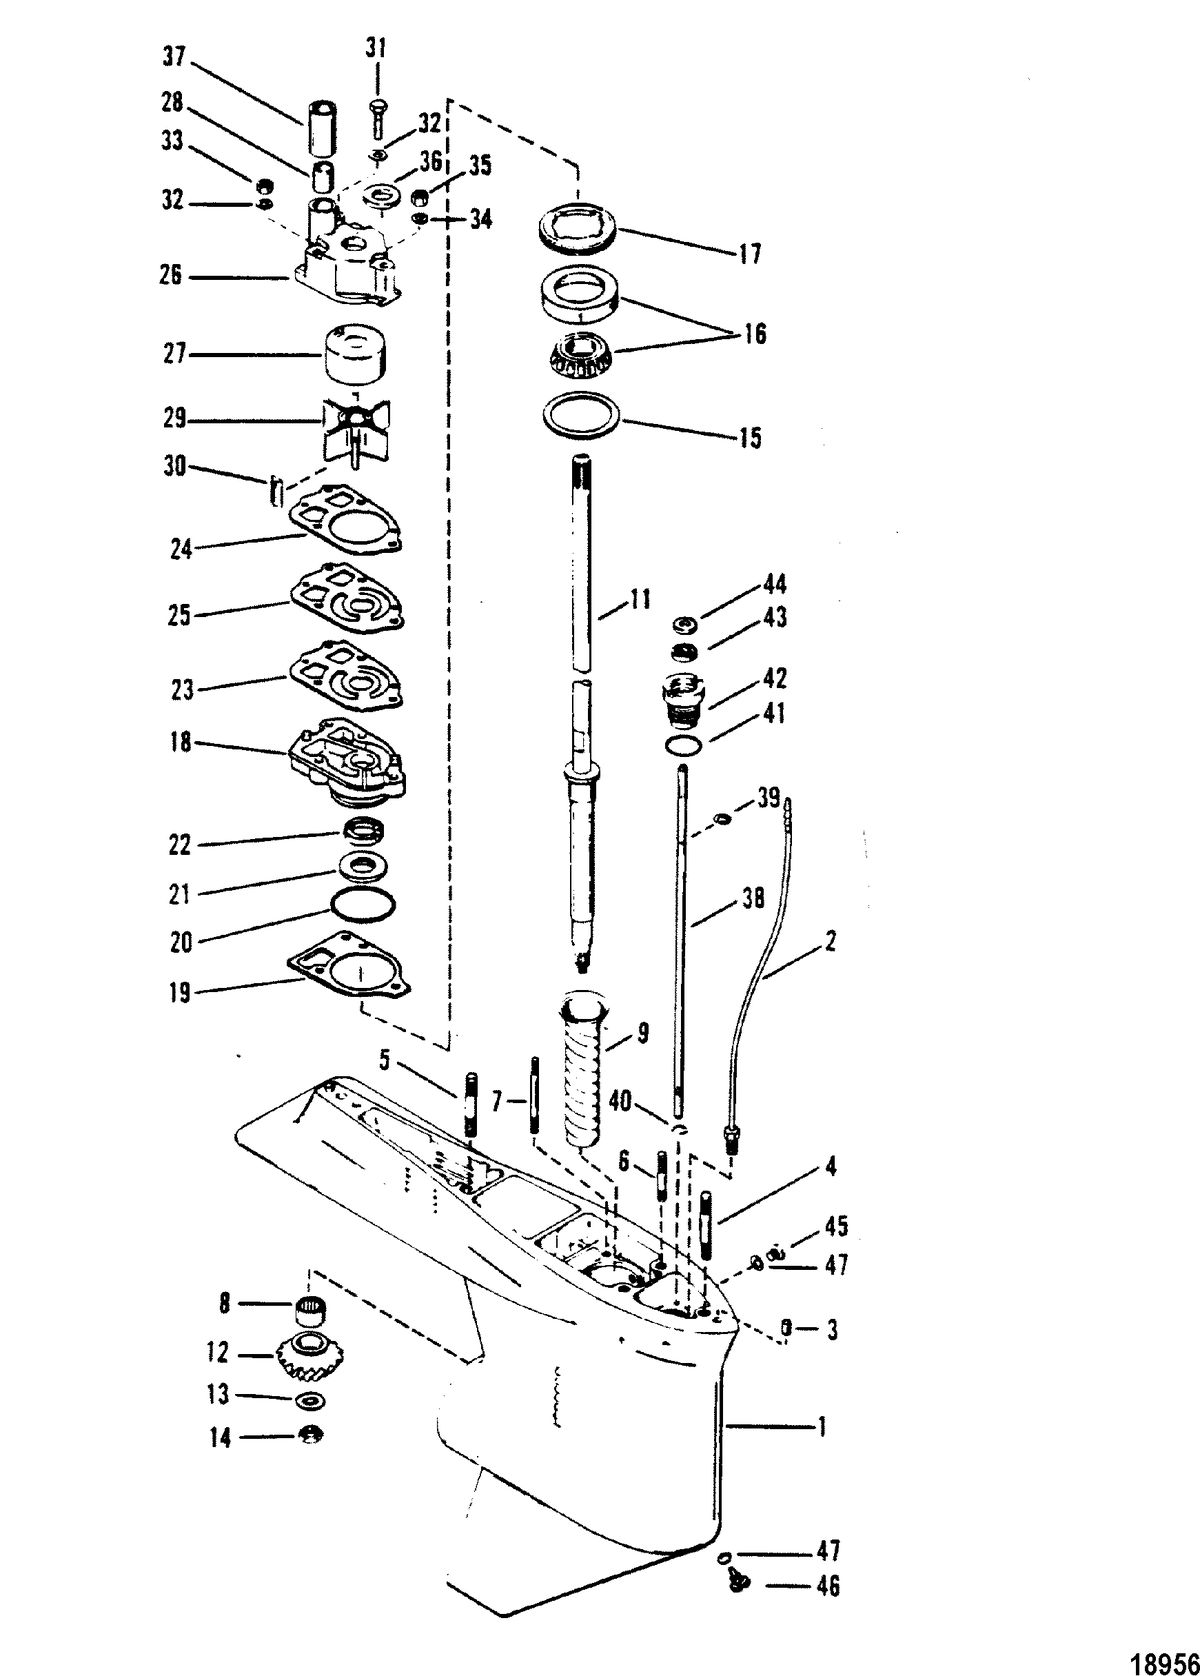 MERCURY/MARINER 175 H.P. V-6 (1976-1988 COMBINED BOOKS) Gear Housing(Drive) 1.86:1 Ratio-15 Teeth Pinion Gear